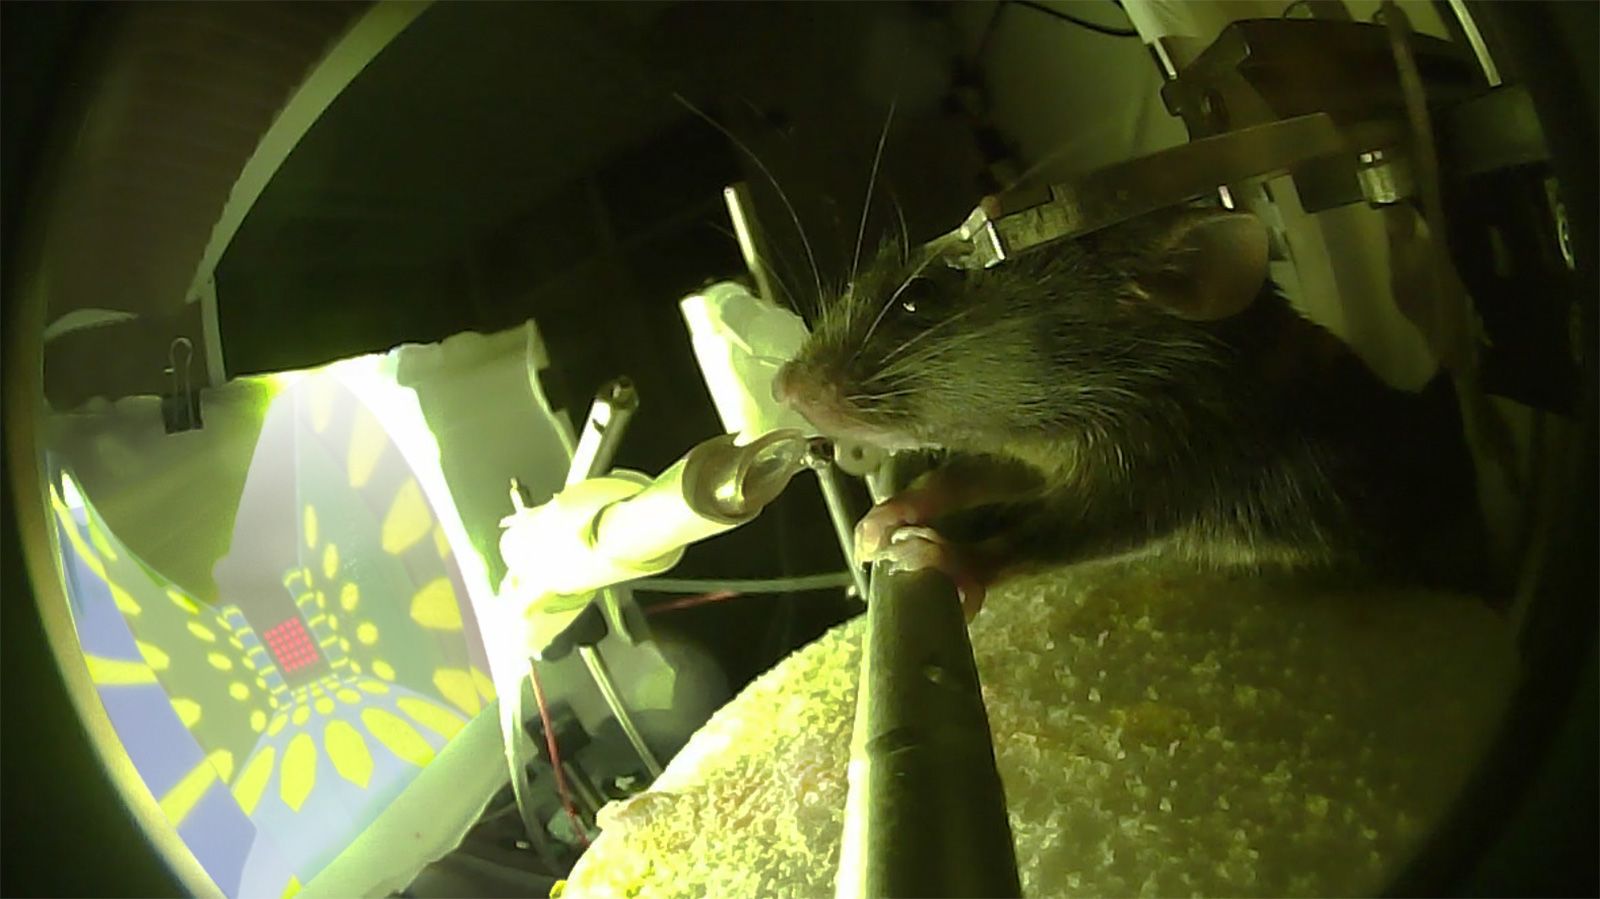 Mouse Trap TV Spot, 'Three Mice' 